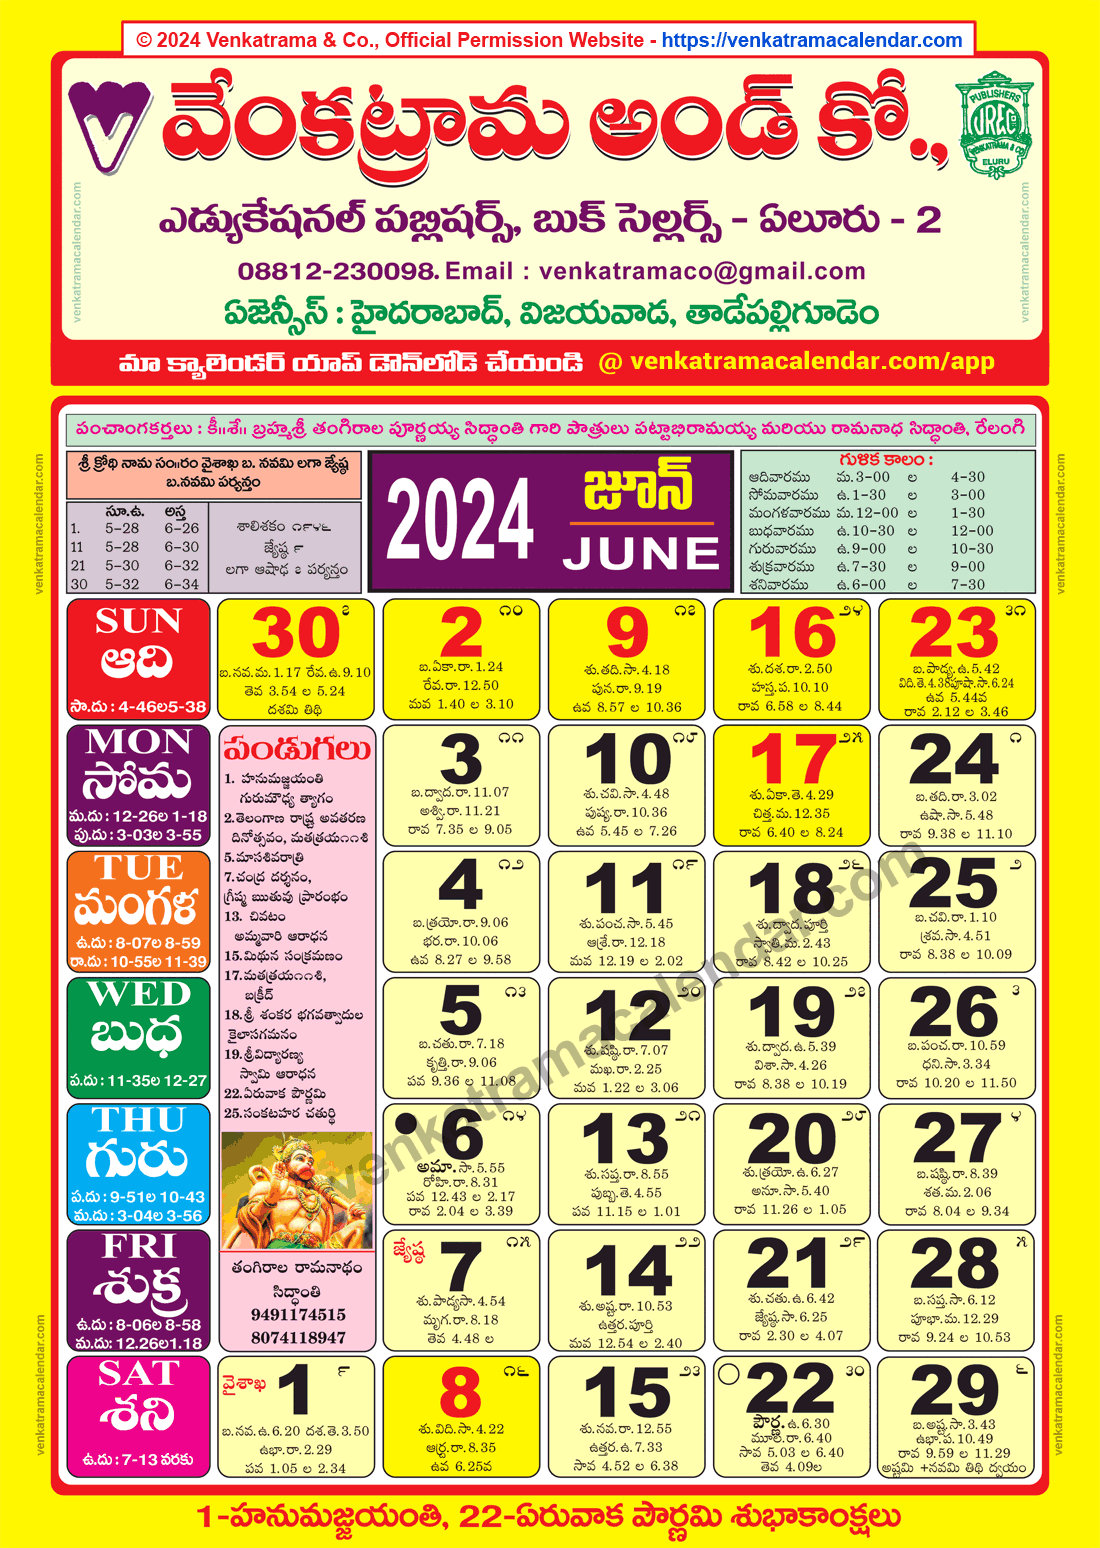 Venkatrama Calendar 2024 June